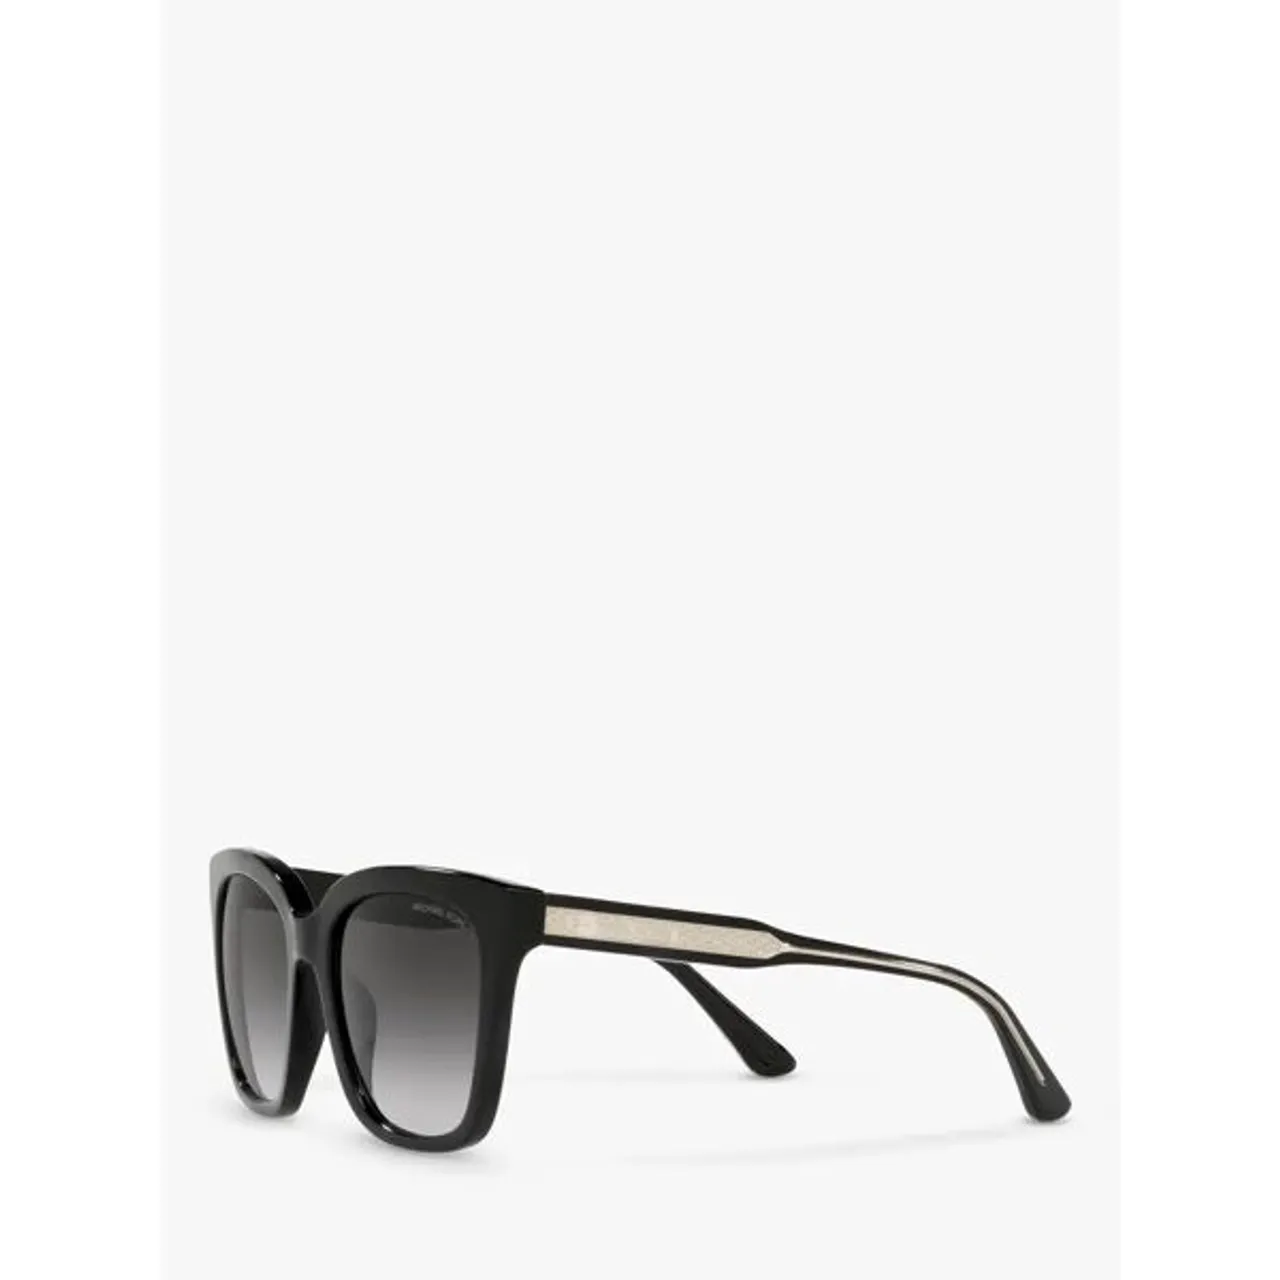 Michael Kors MK2163 Women's San Marino Square Sunglasses - Black/Grey Gradient - Female